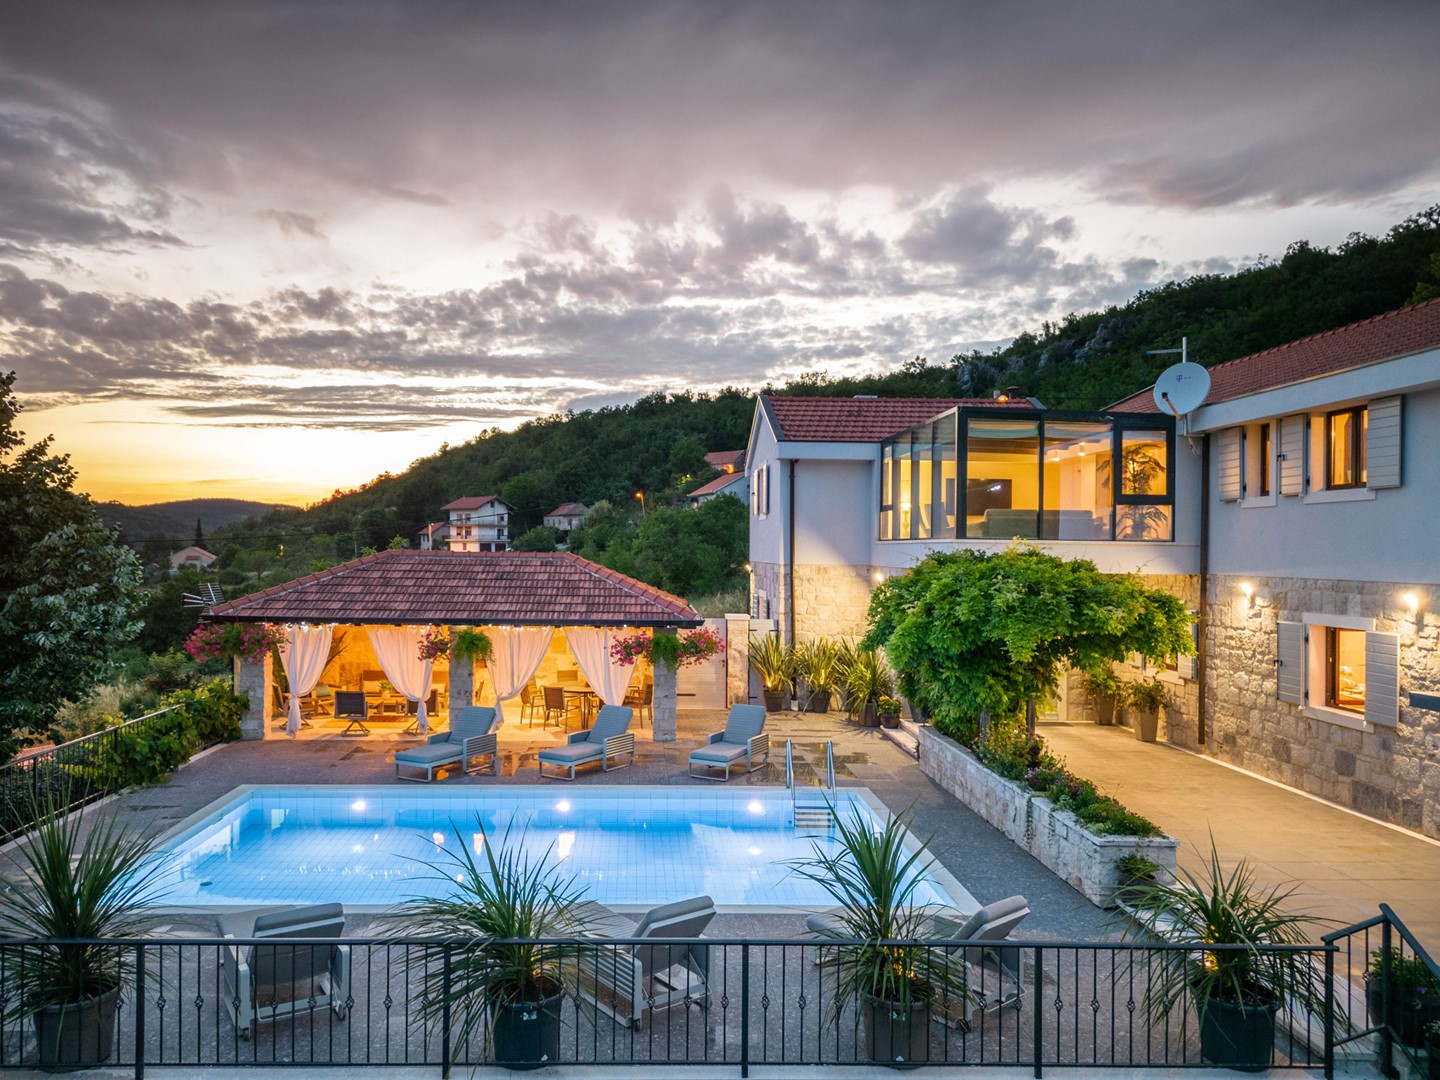 Luxury Villa Enofilia Trilj with an outdoor pool, jacuzzi, sauna, gym.